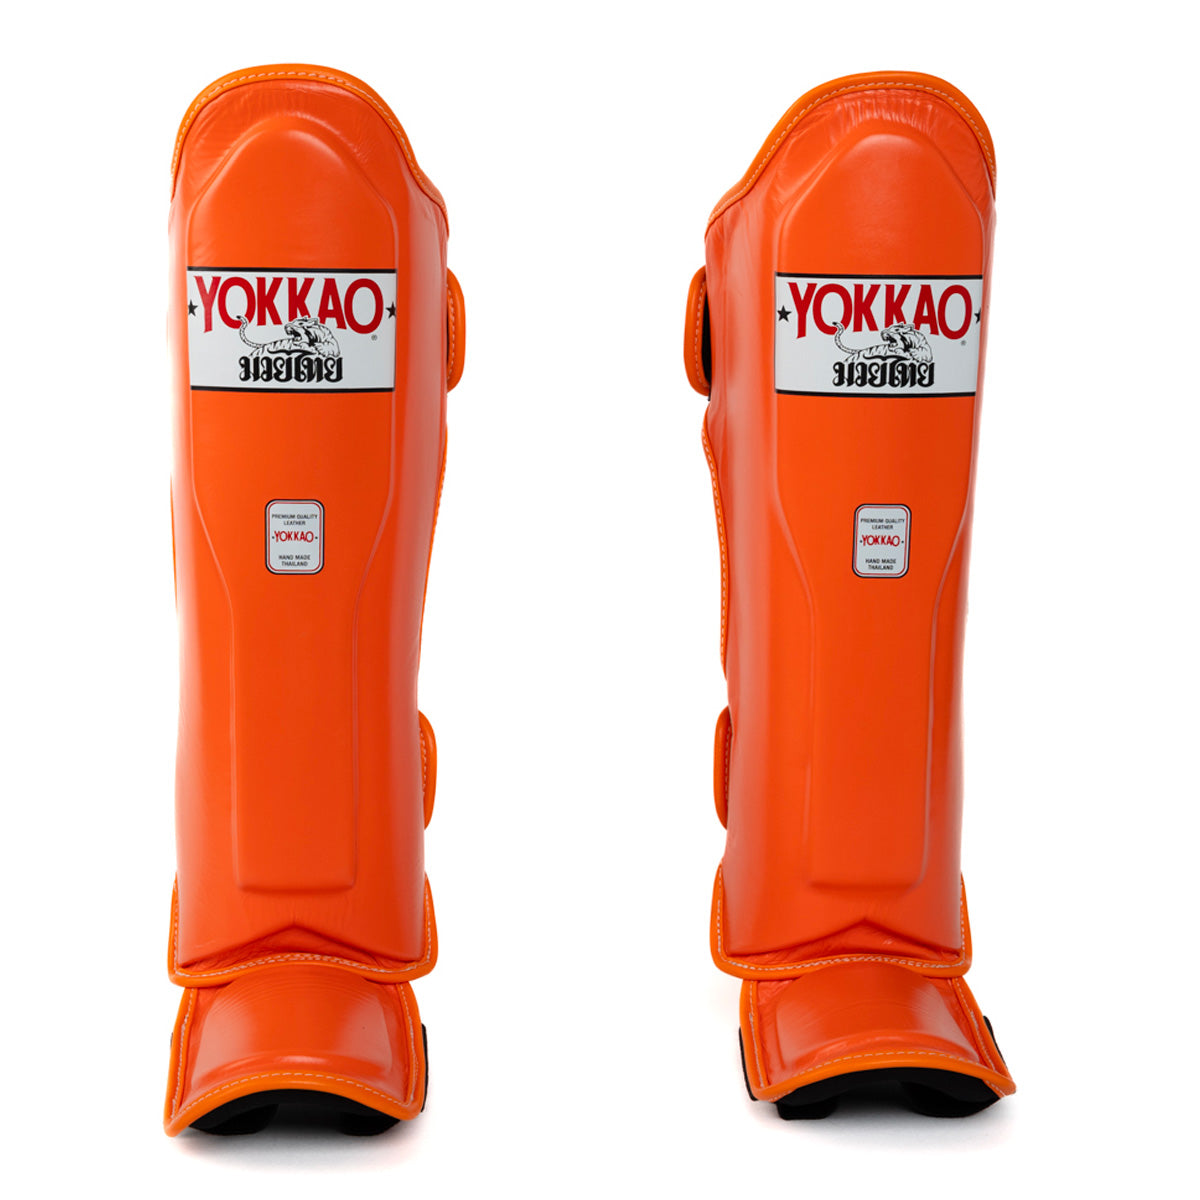 YOKKAO Orange Ibis Boxing Gloves | YOKKAO USA